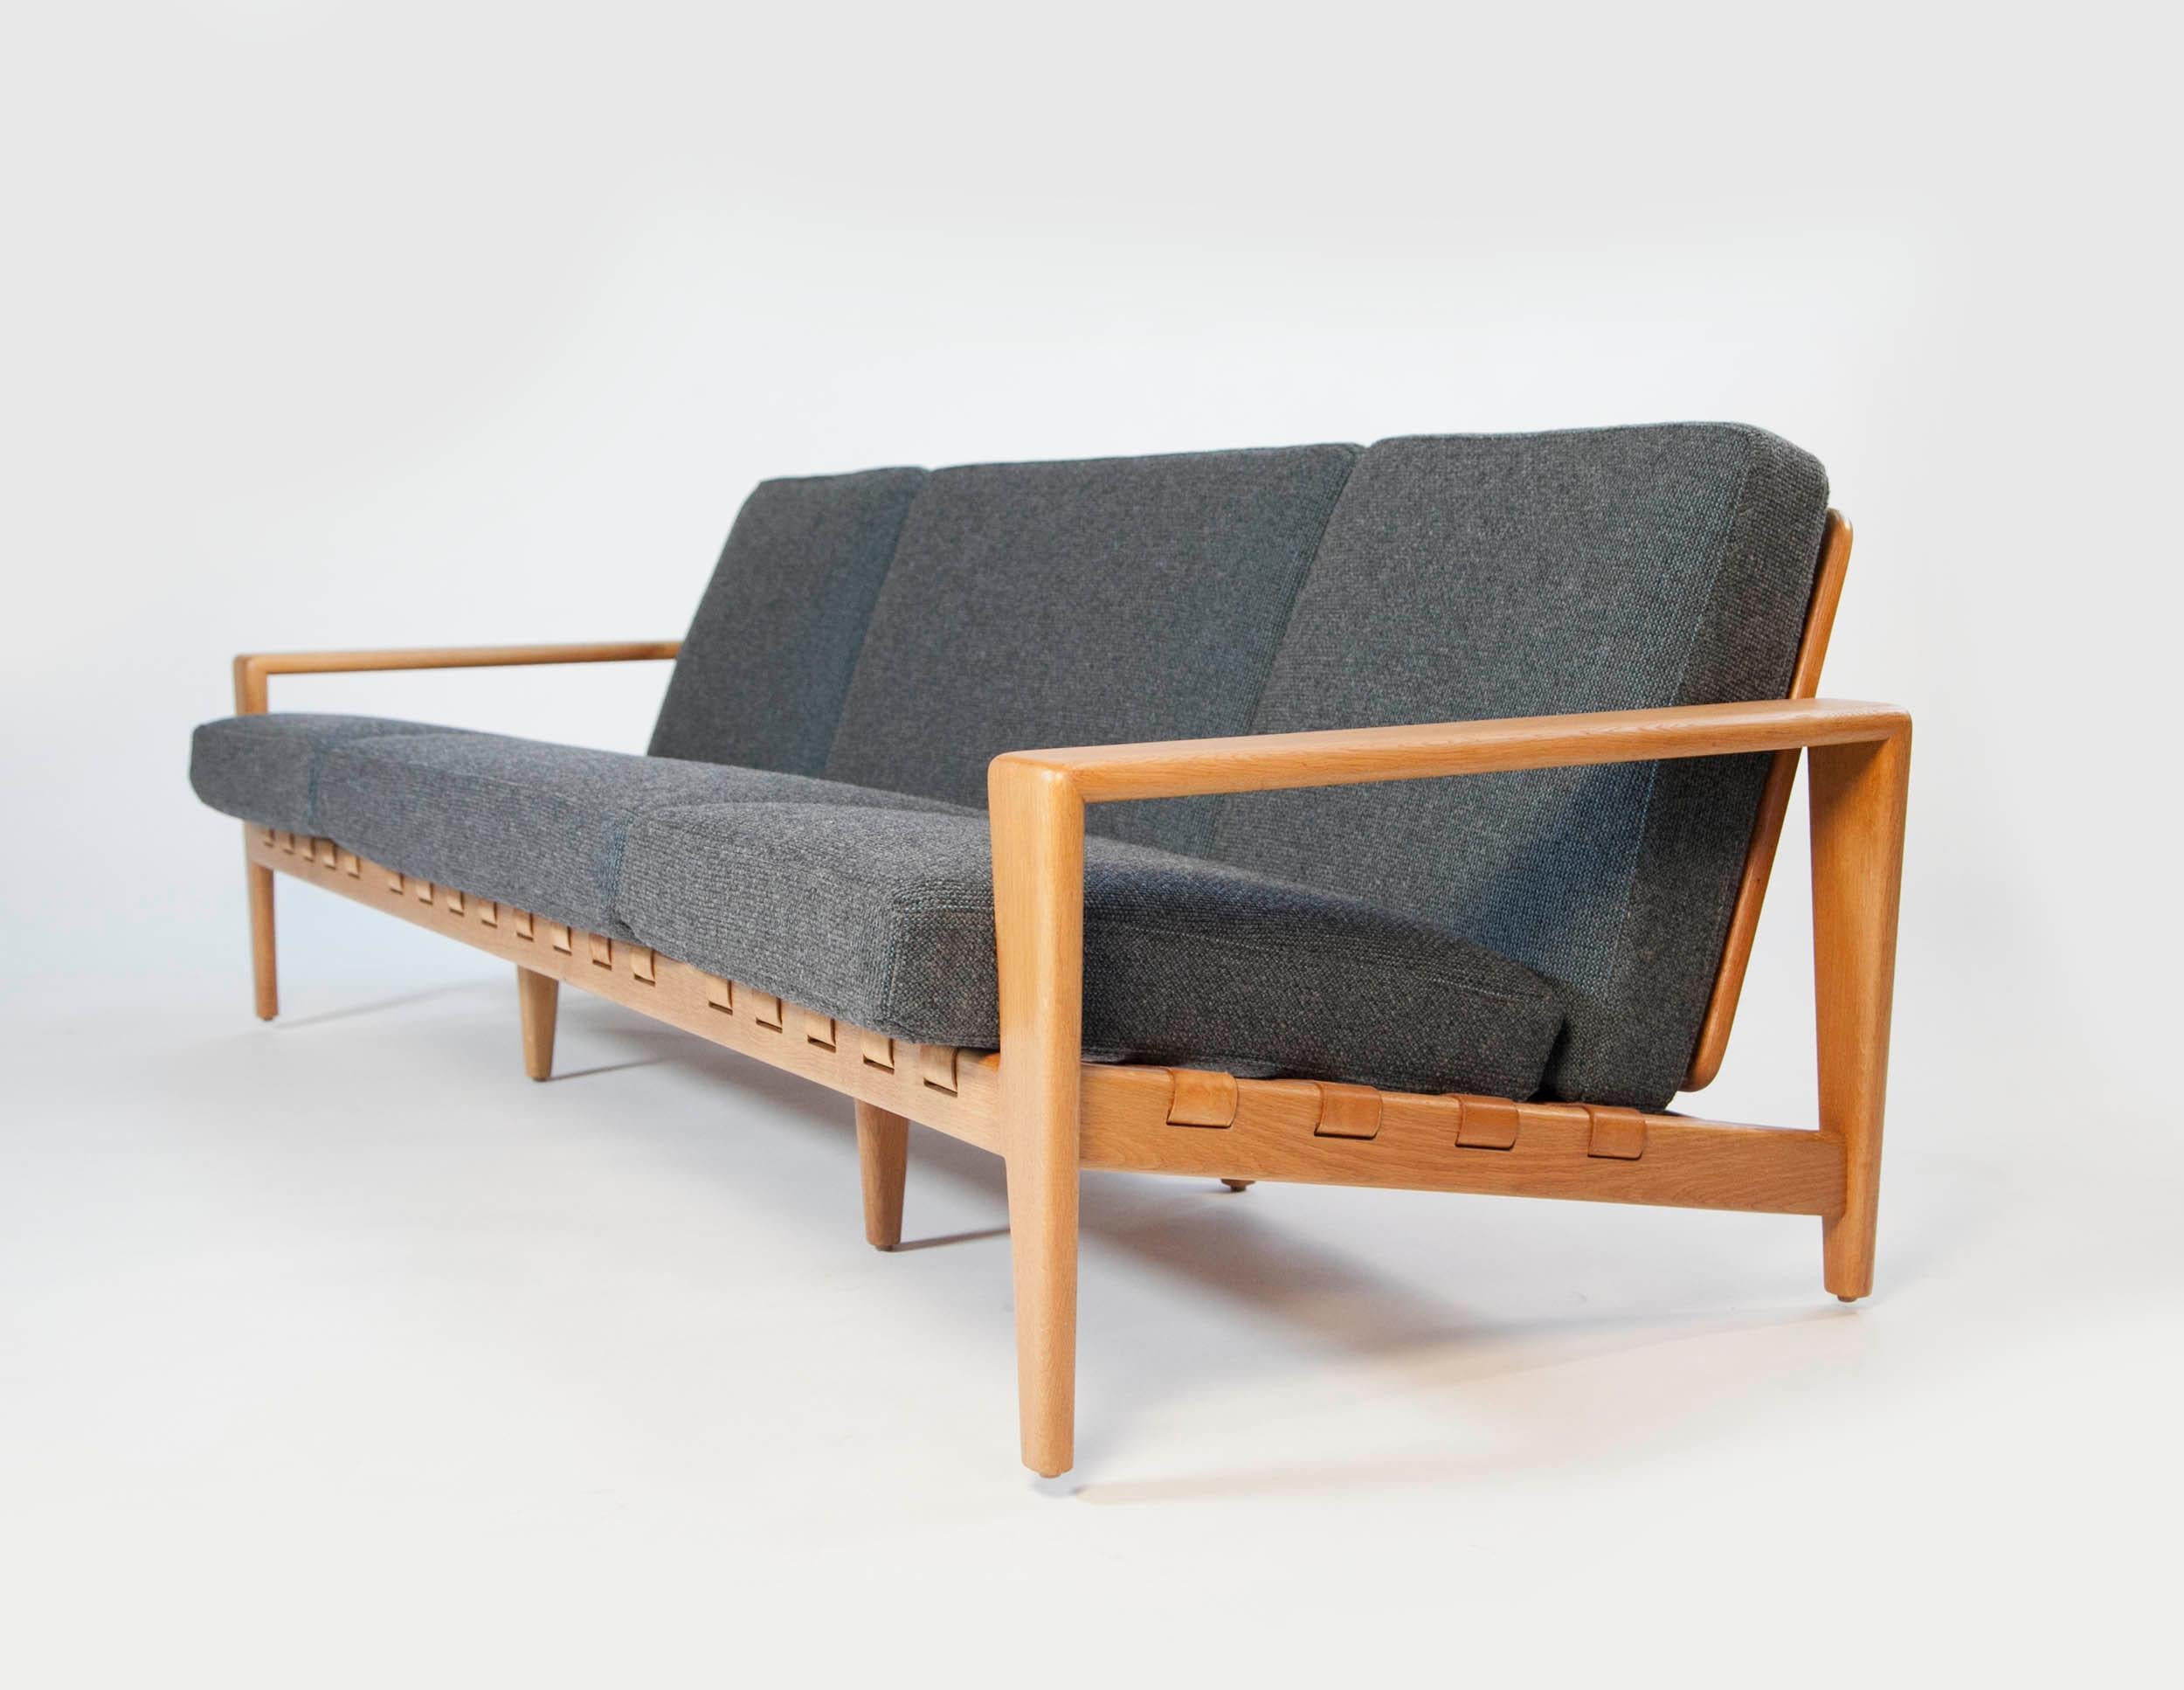 Svante Skogh Four-Seat Bodö Sofa by Seffle Möbelfabrik in Sweden, 1960s For Sale 1